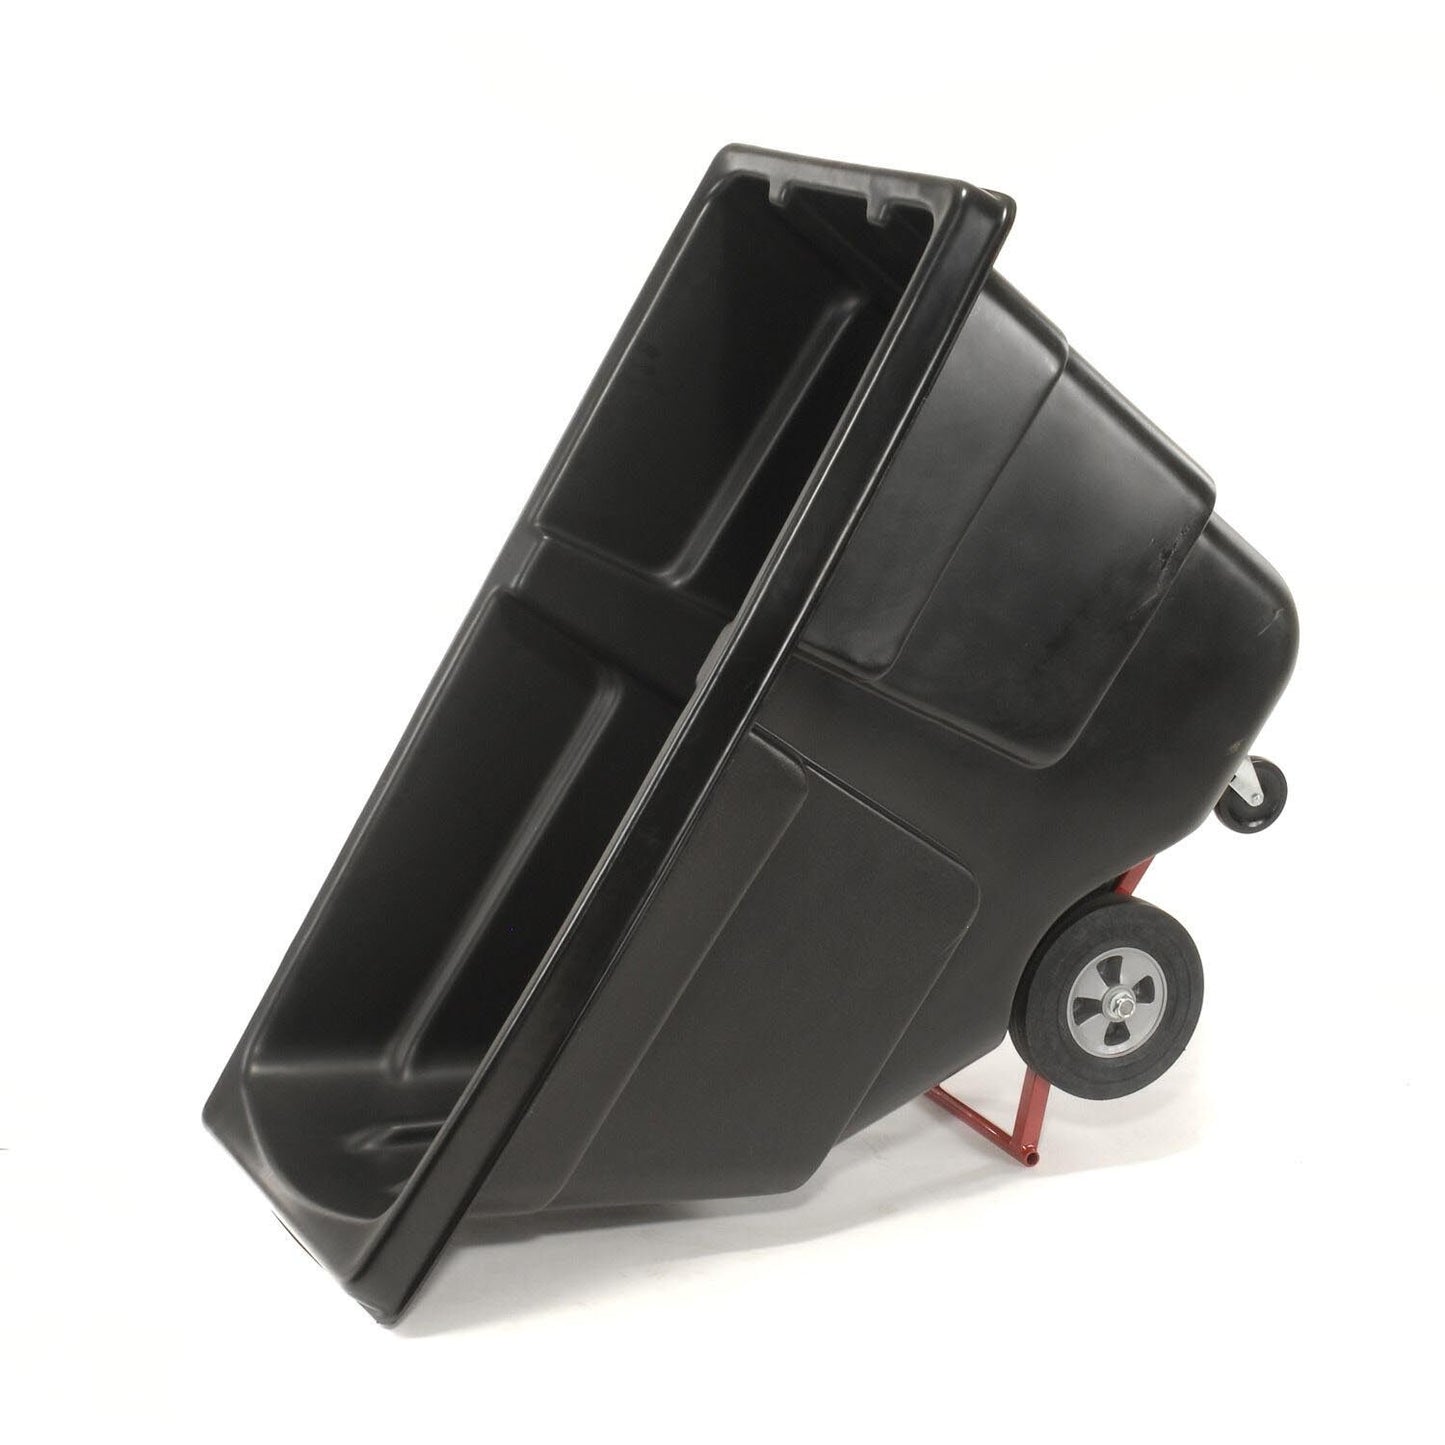 Tilt TRASH BIN - 450 lbs Capacity - 1/2 Cubic Yard - Portable - Waste - Garbage